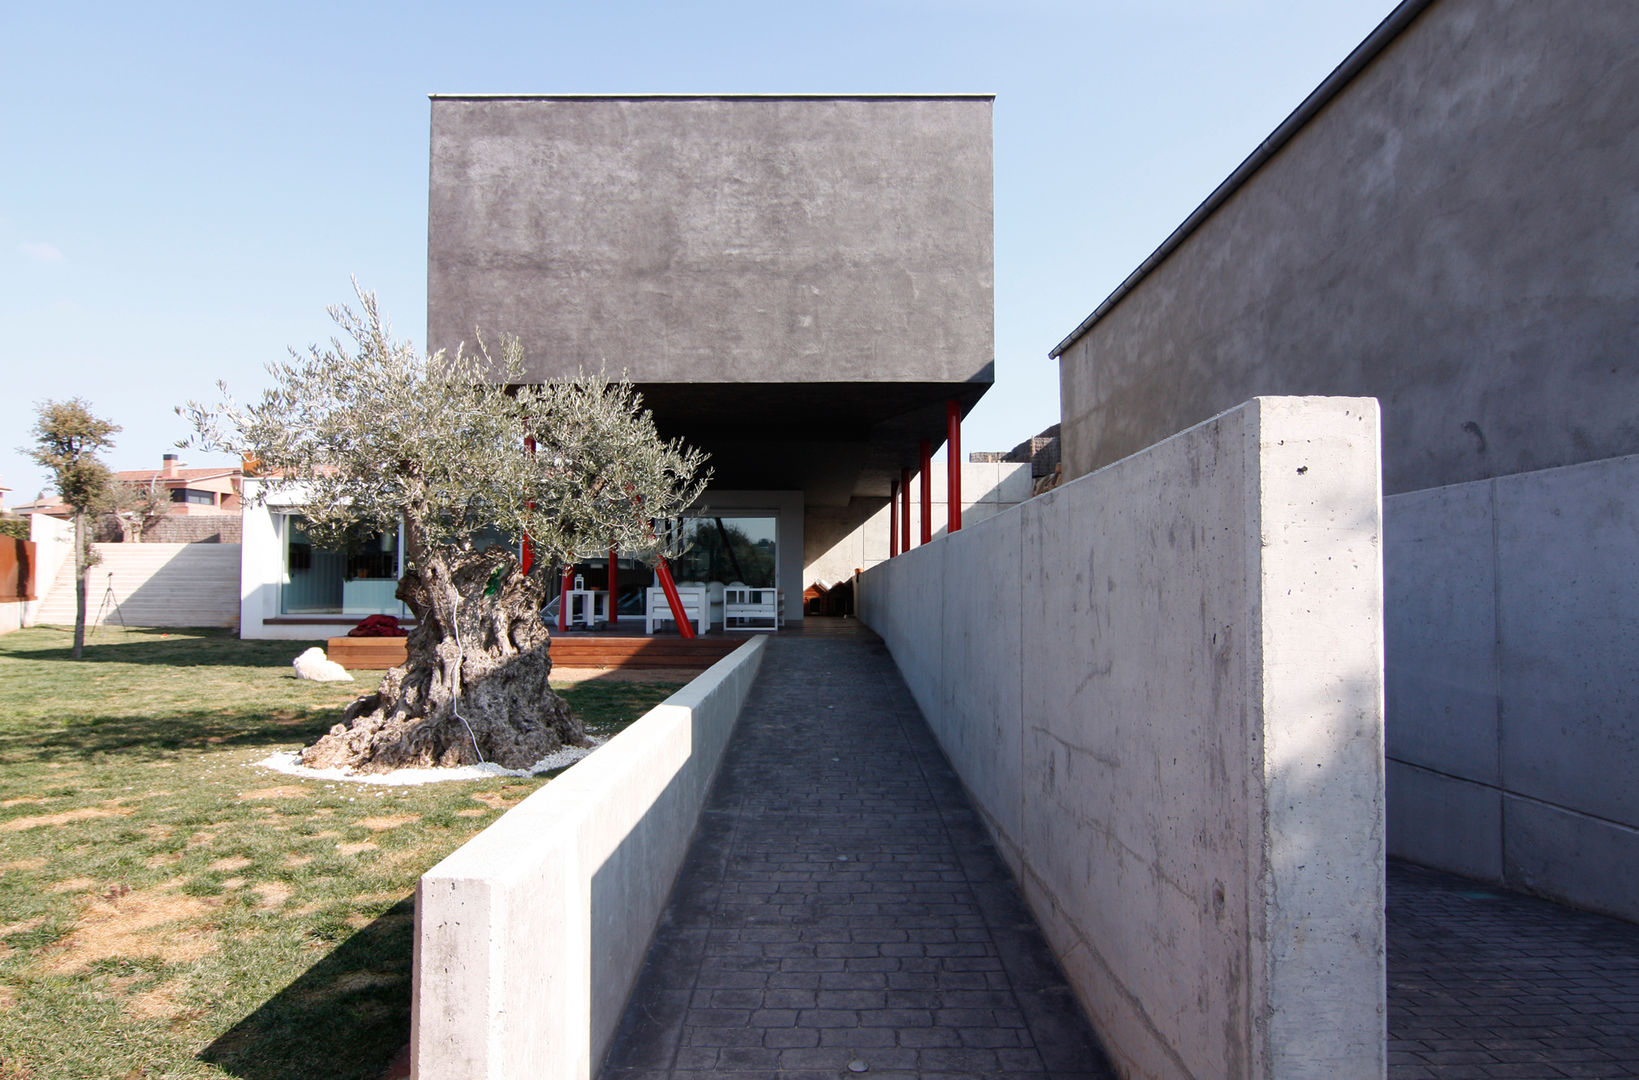 Vivienda unifamiliar en Navàs. Rampa de acceso peatonal eidée arquitectes S.L.P. Casas minimalistas